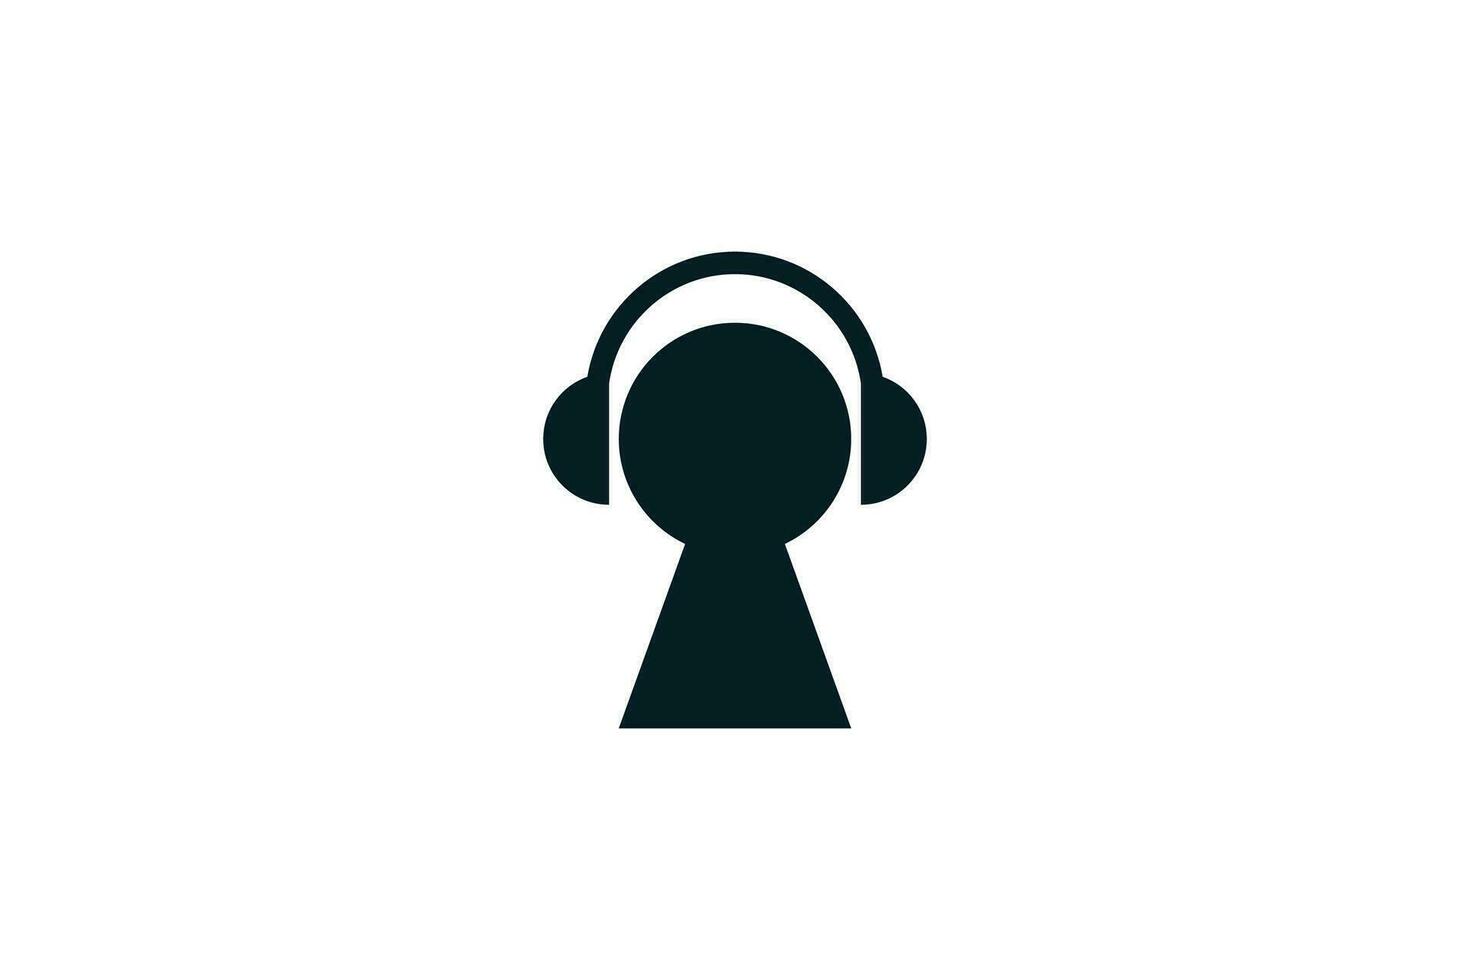 keyhole listening music, headphone element, simple modern logo design vector